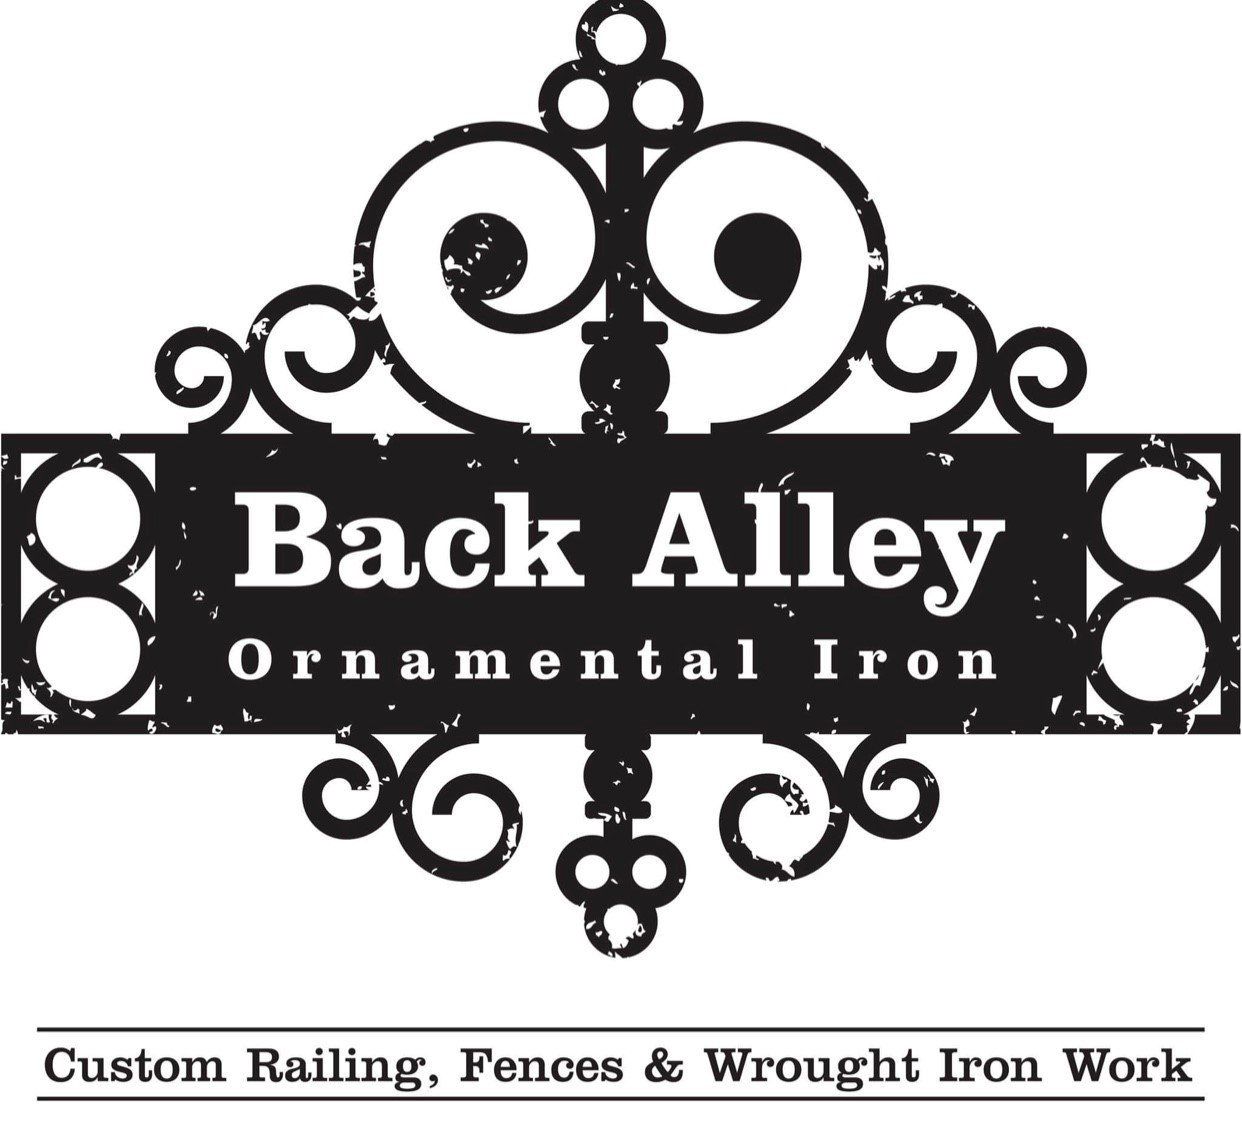 Back Alley Ornamental Iron